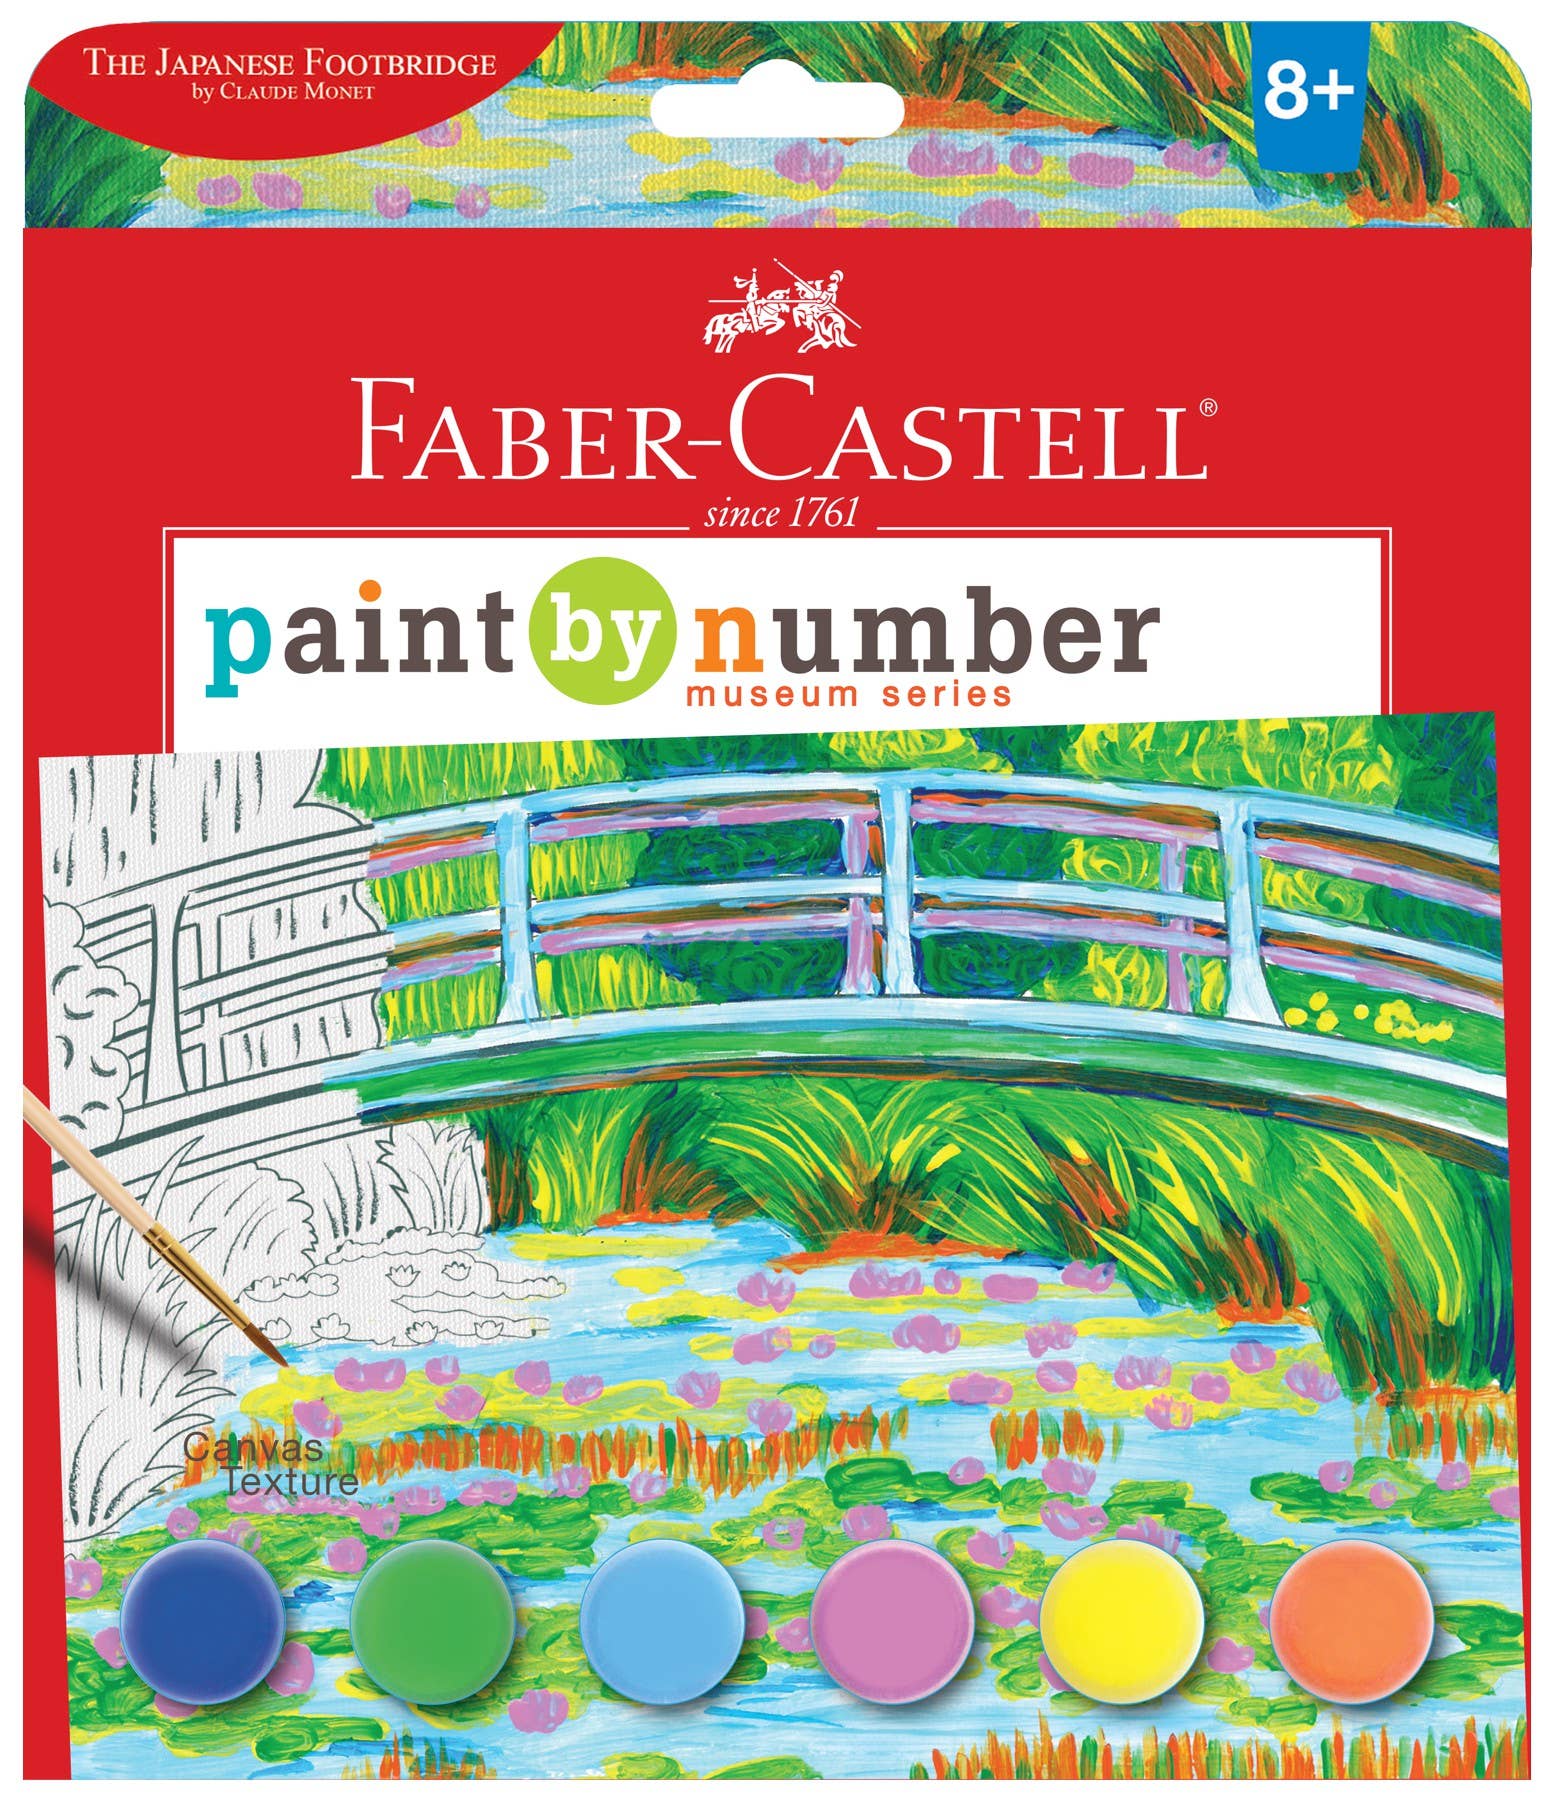 Paint by Number Museum Series - The Japanese Footbridge